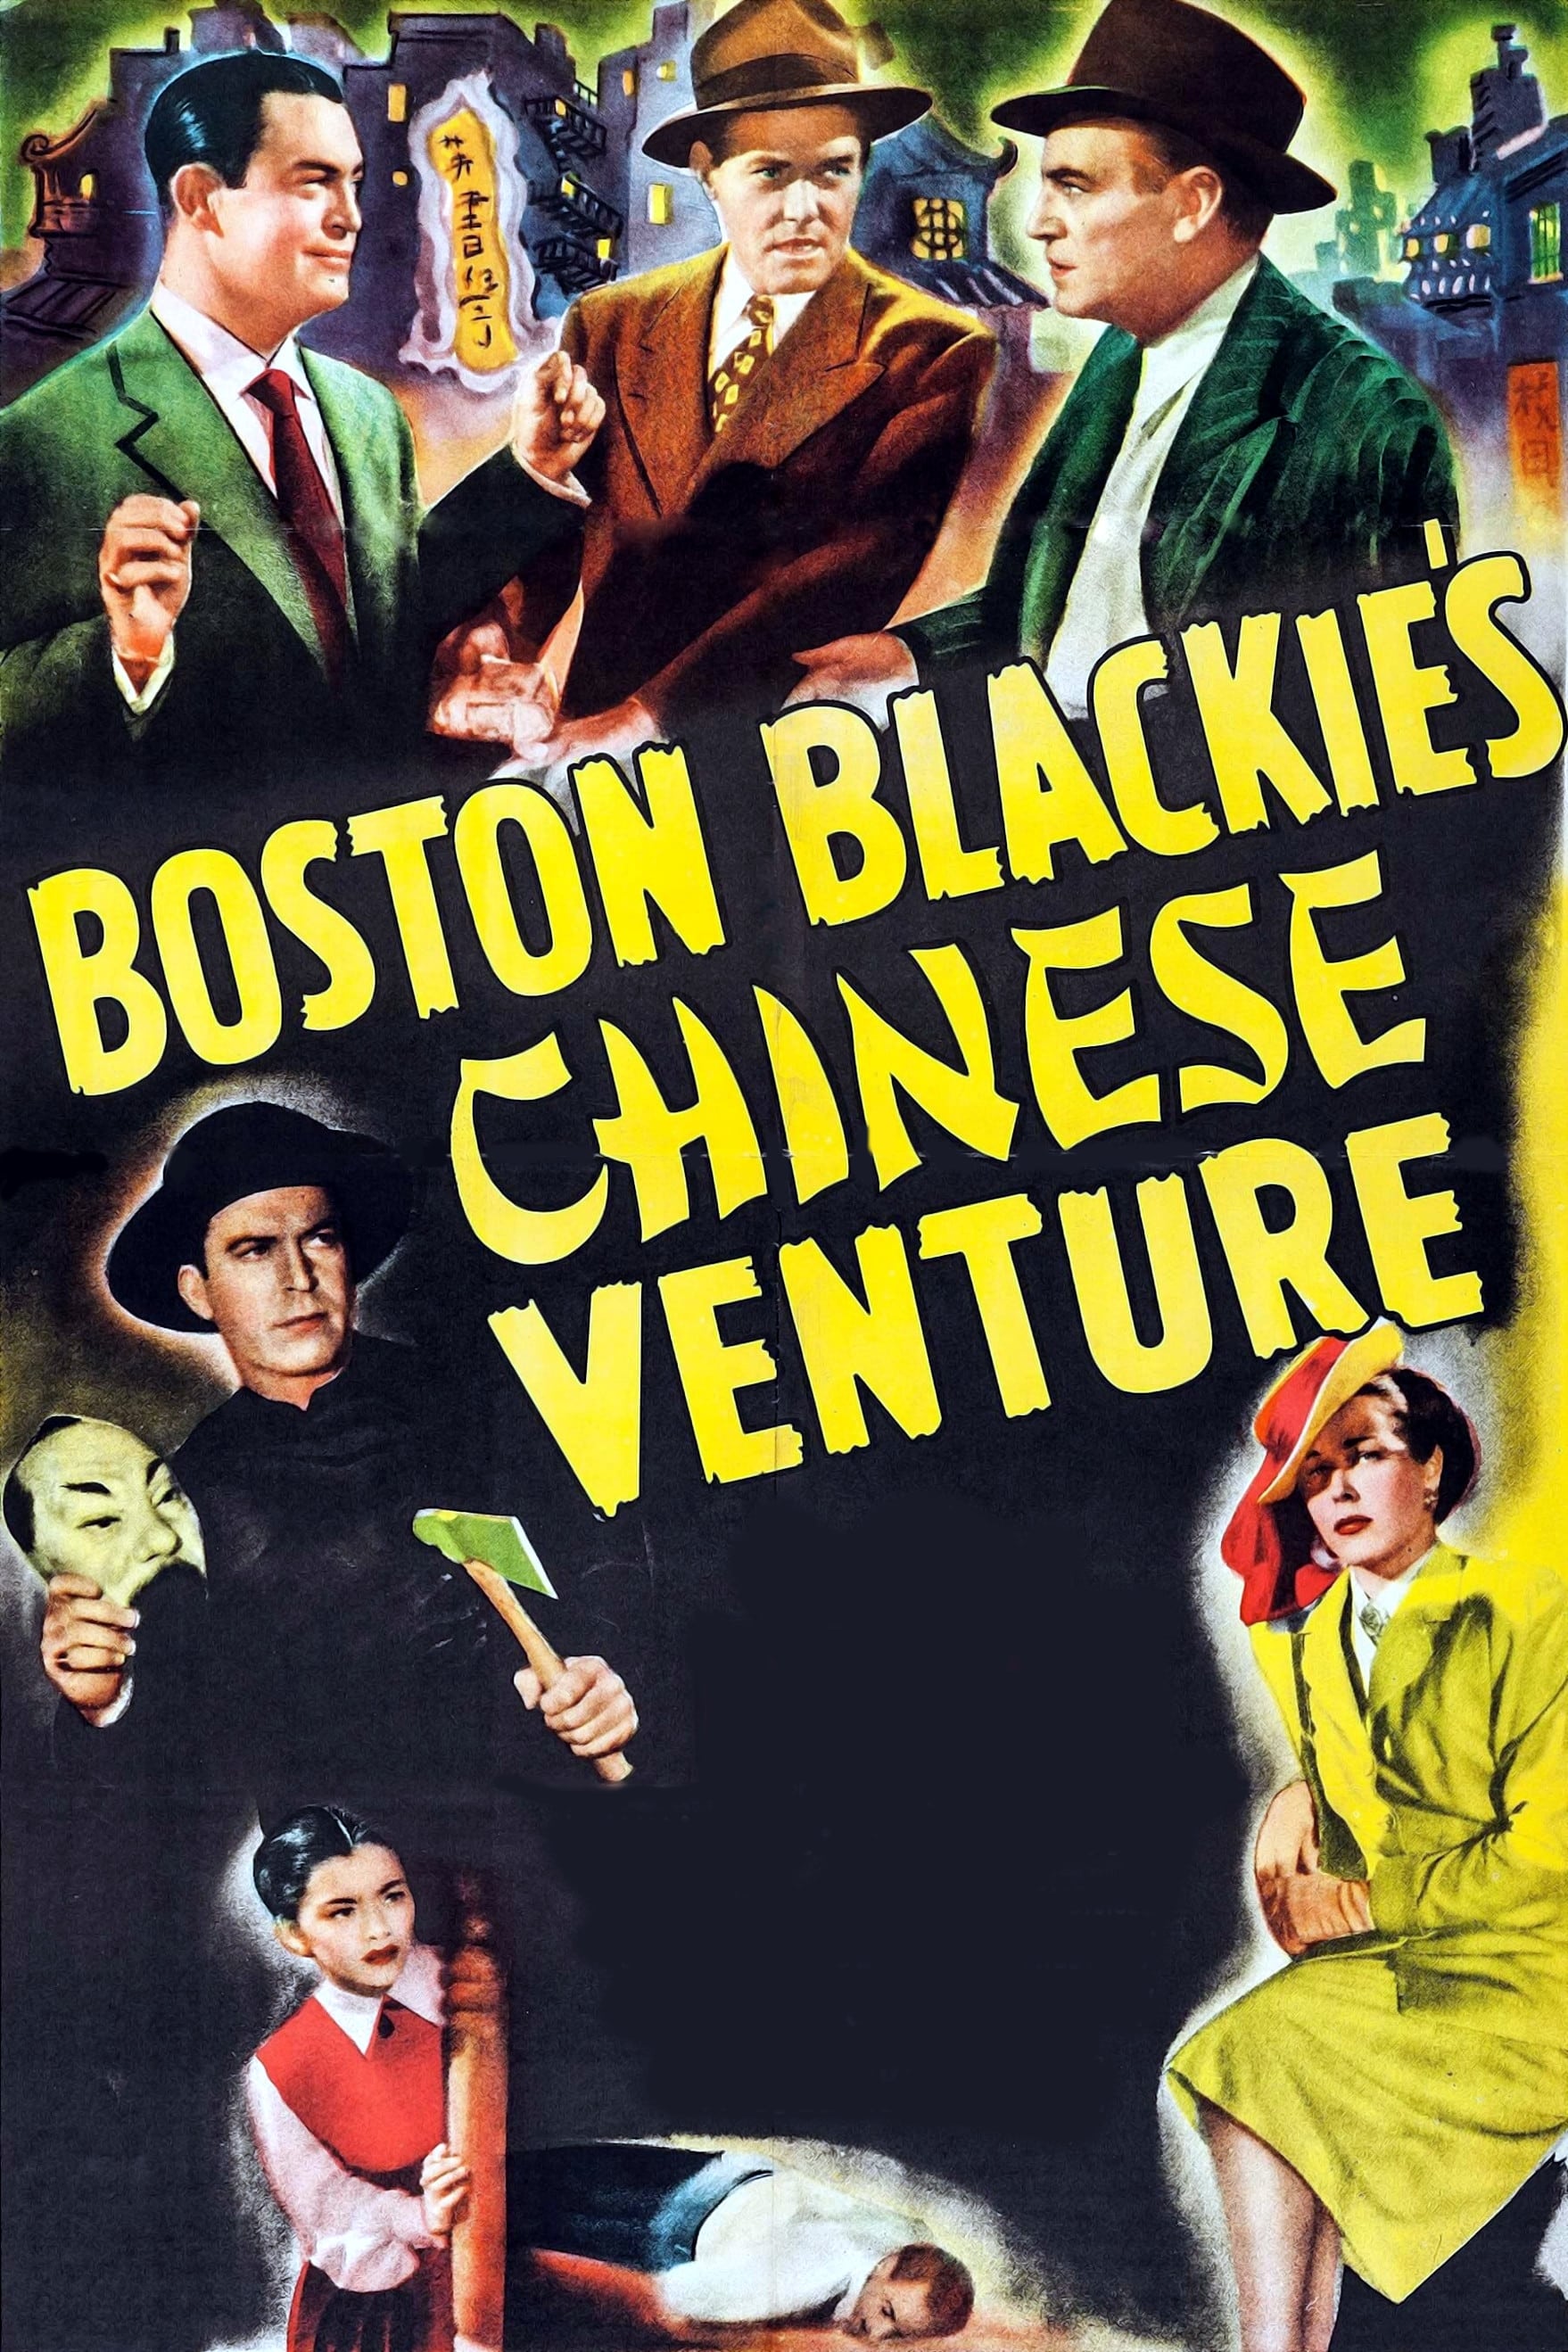 Boston Blackie's Chinese Venture (1949)